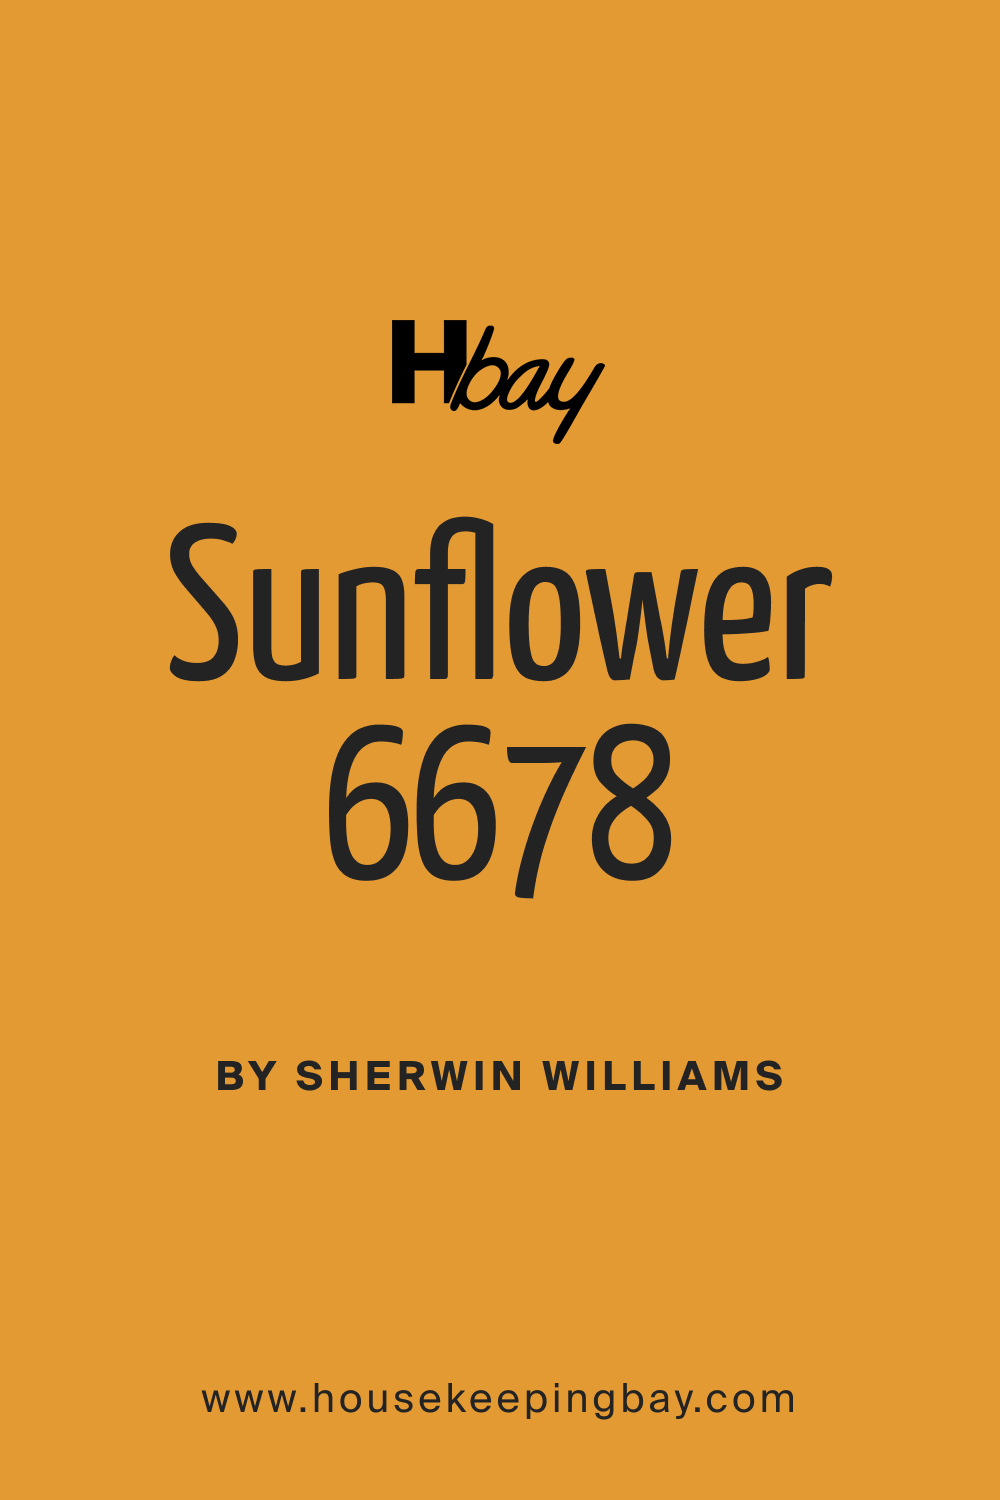 Sunflower SW 6678 by Sherwin Williams